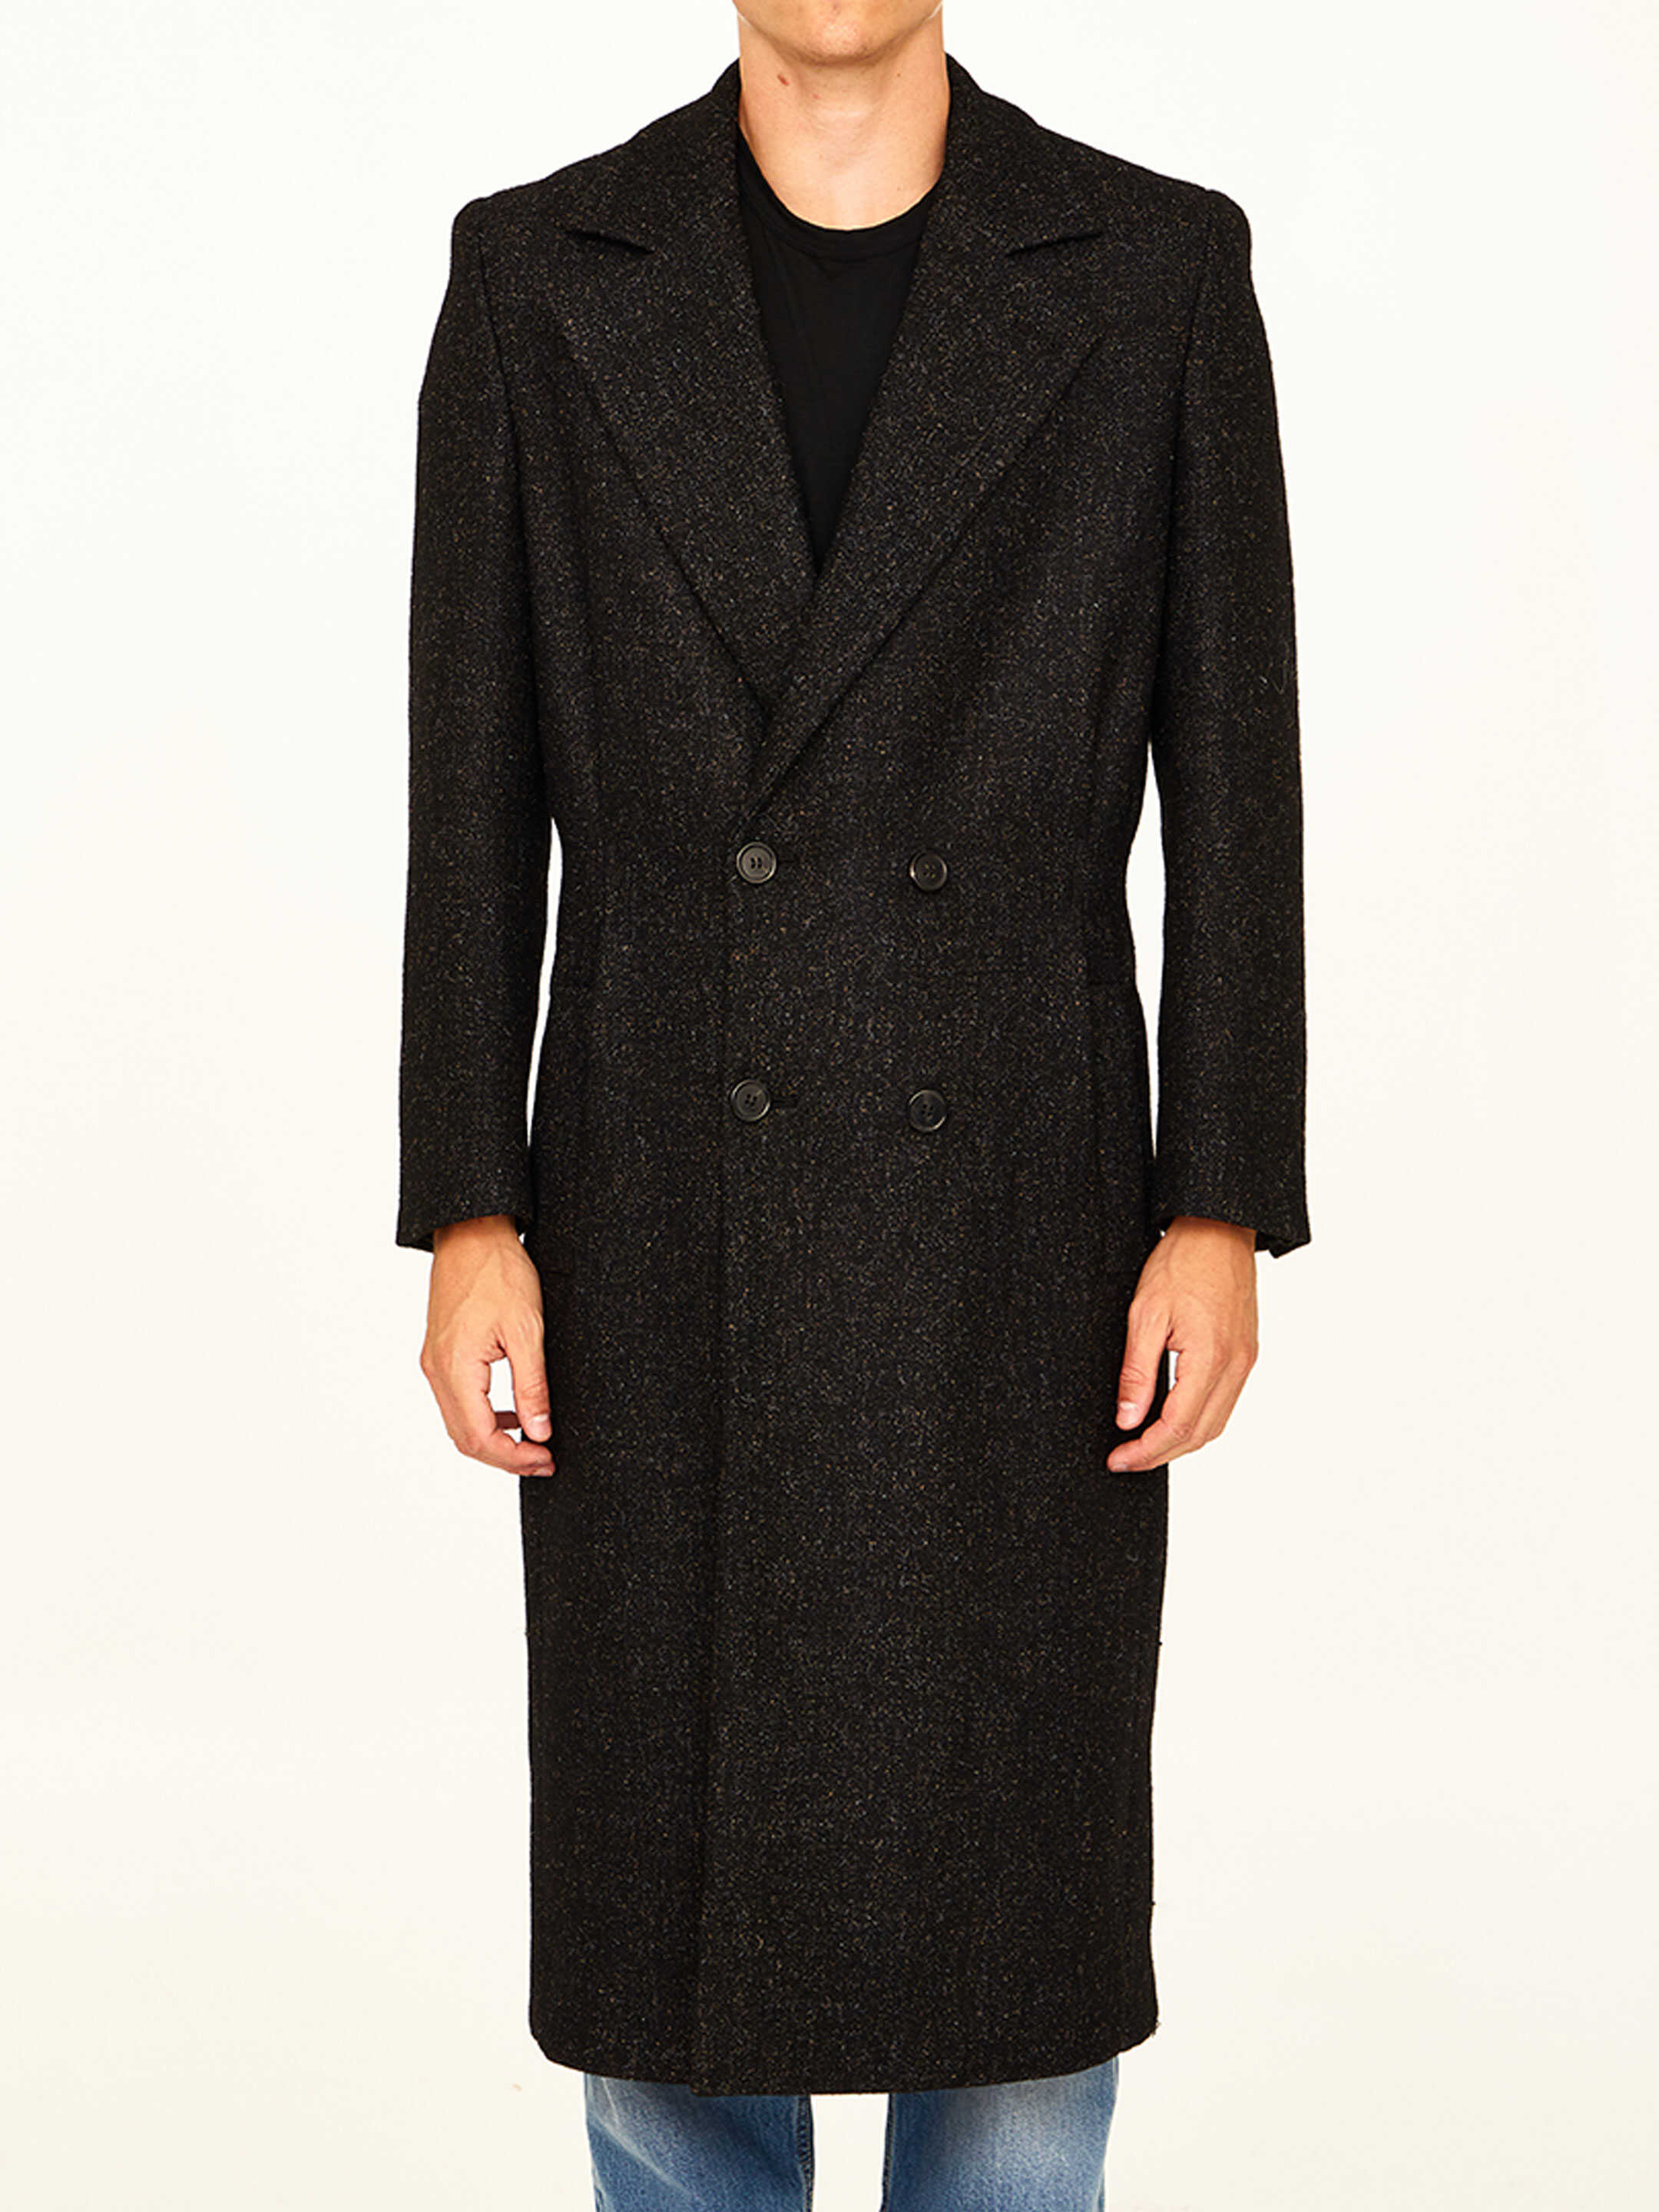 Saint Laurent Double-Breasted Wool Coat BLACK